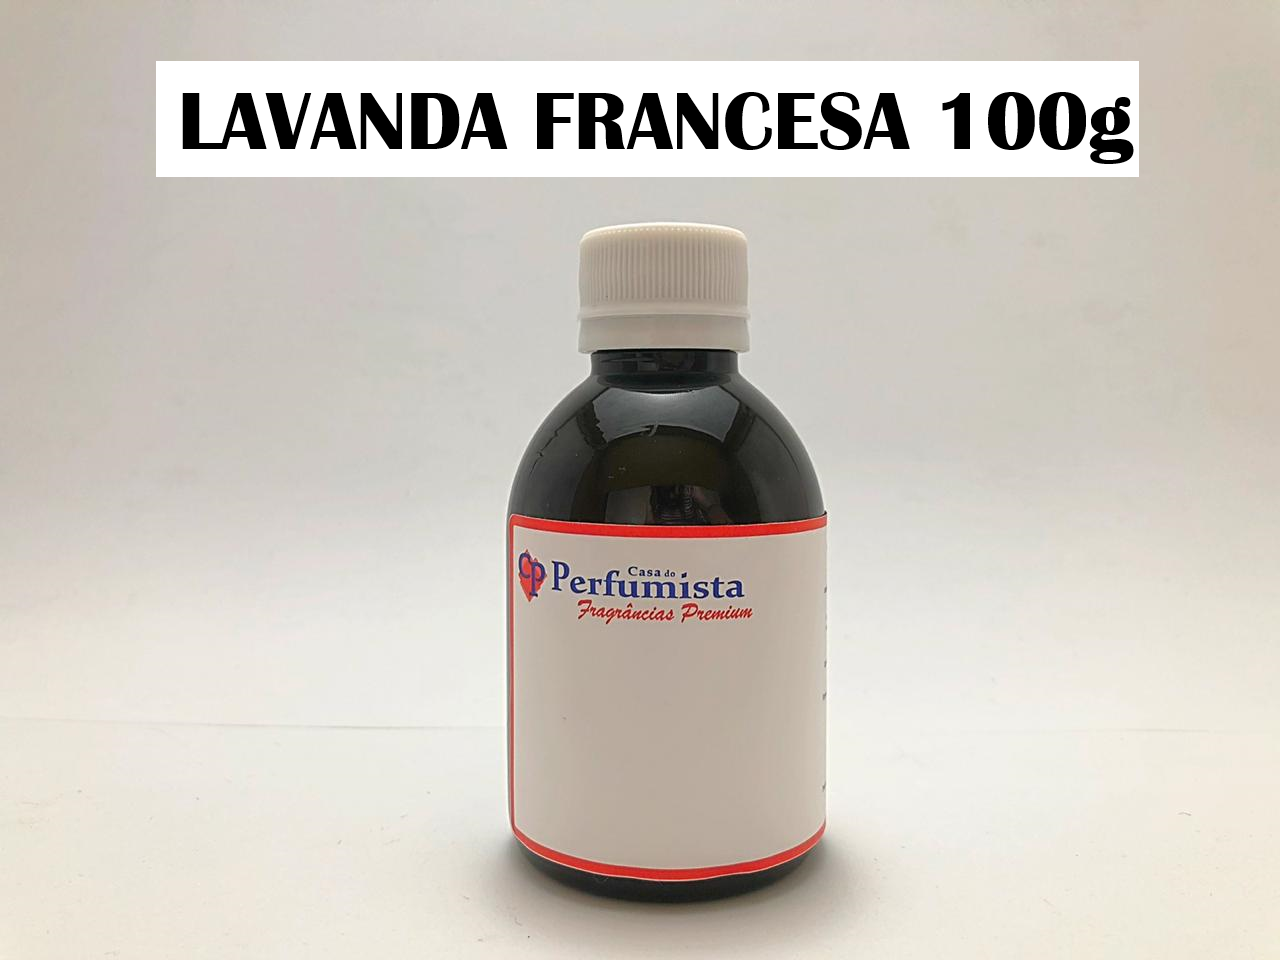 LAVANDA FRANCESA - 100g